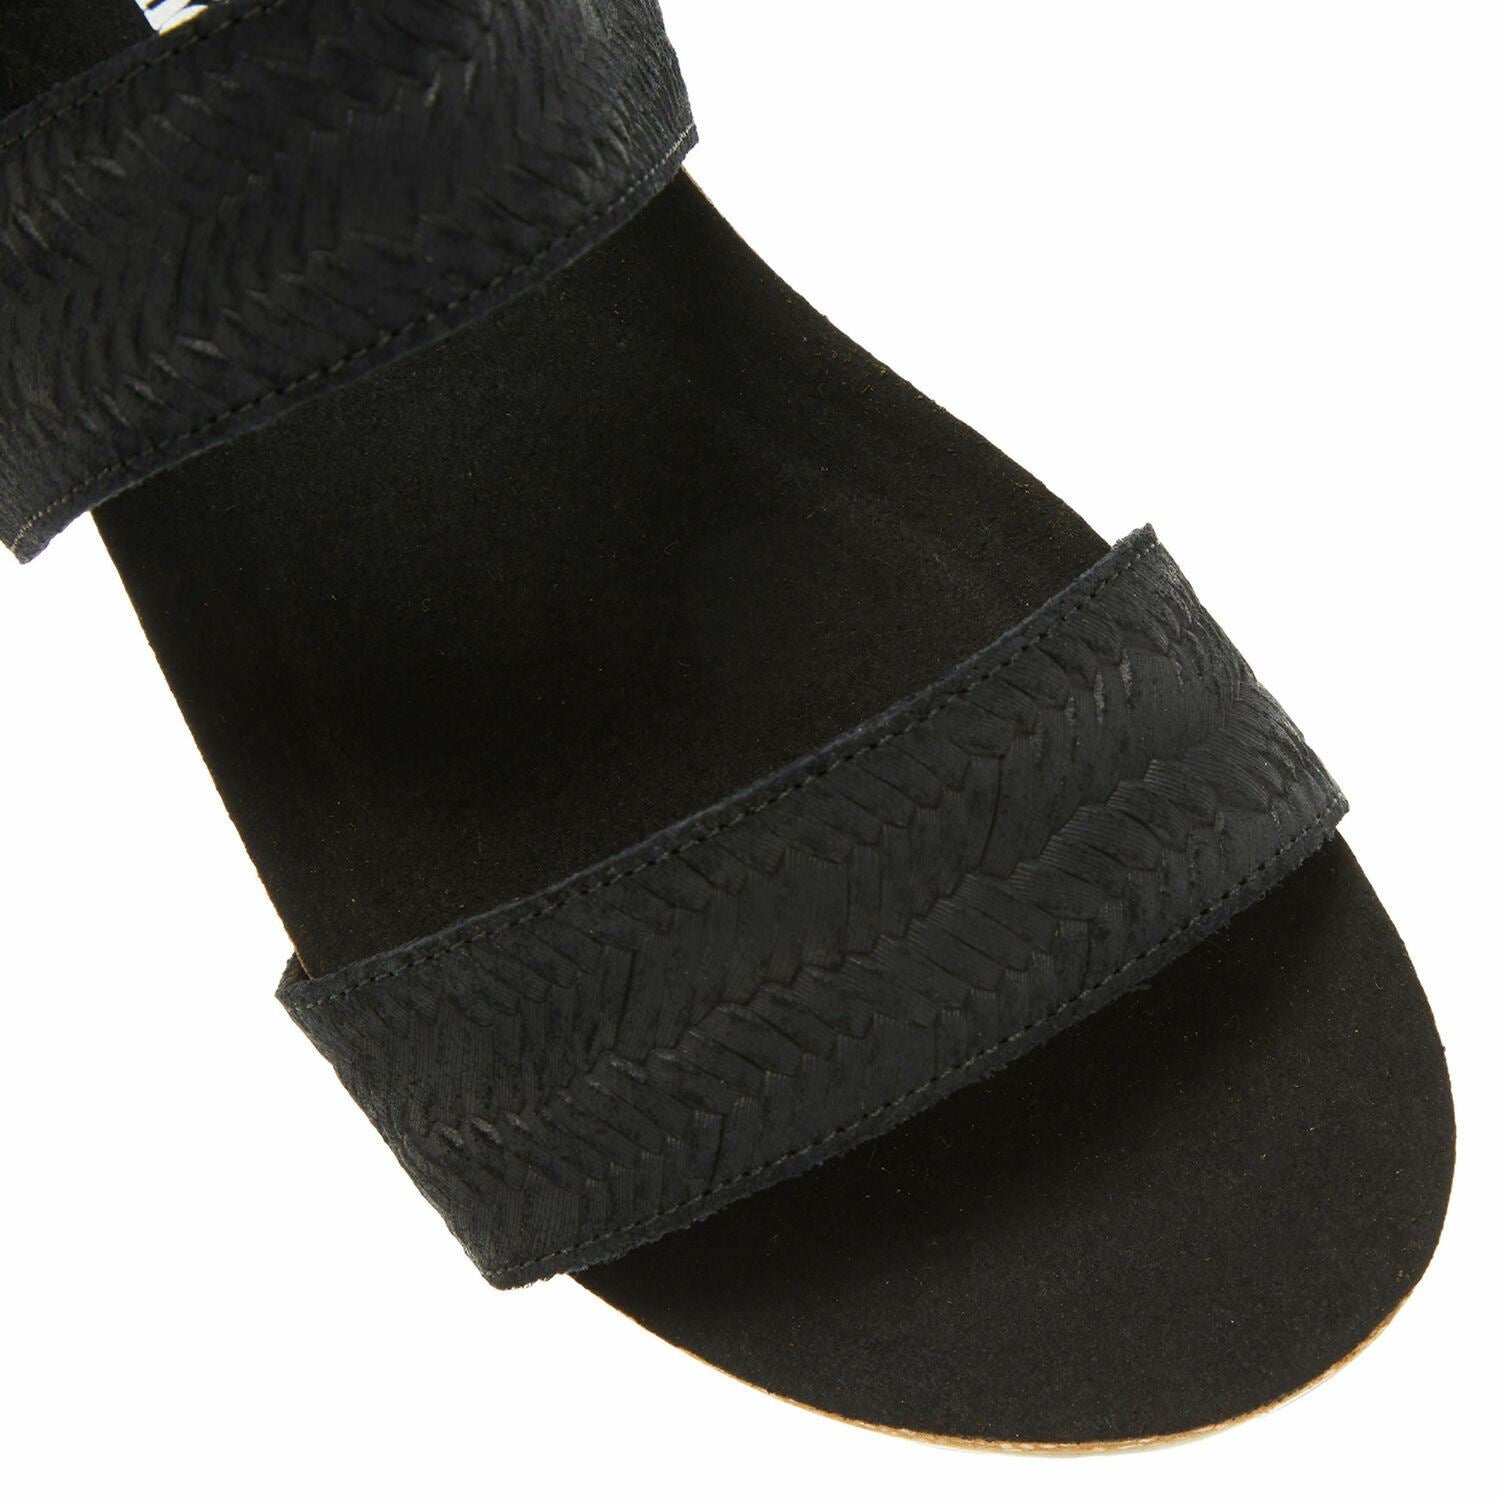 TIMBERLAND Women's MALIBU WAVES Black Embossed Suede Leather Sandals, UK 4.5